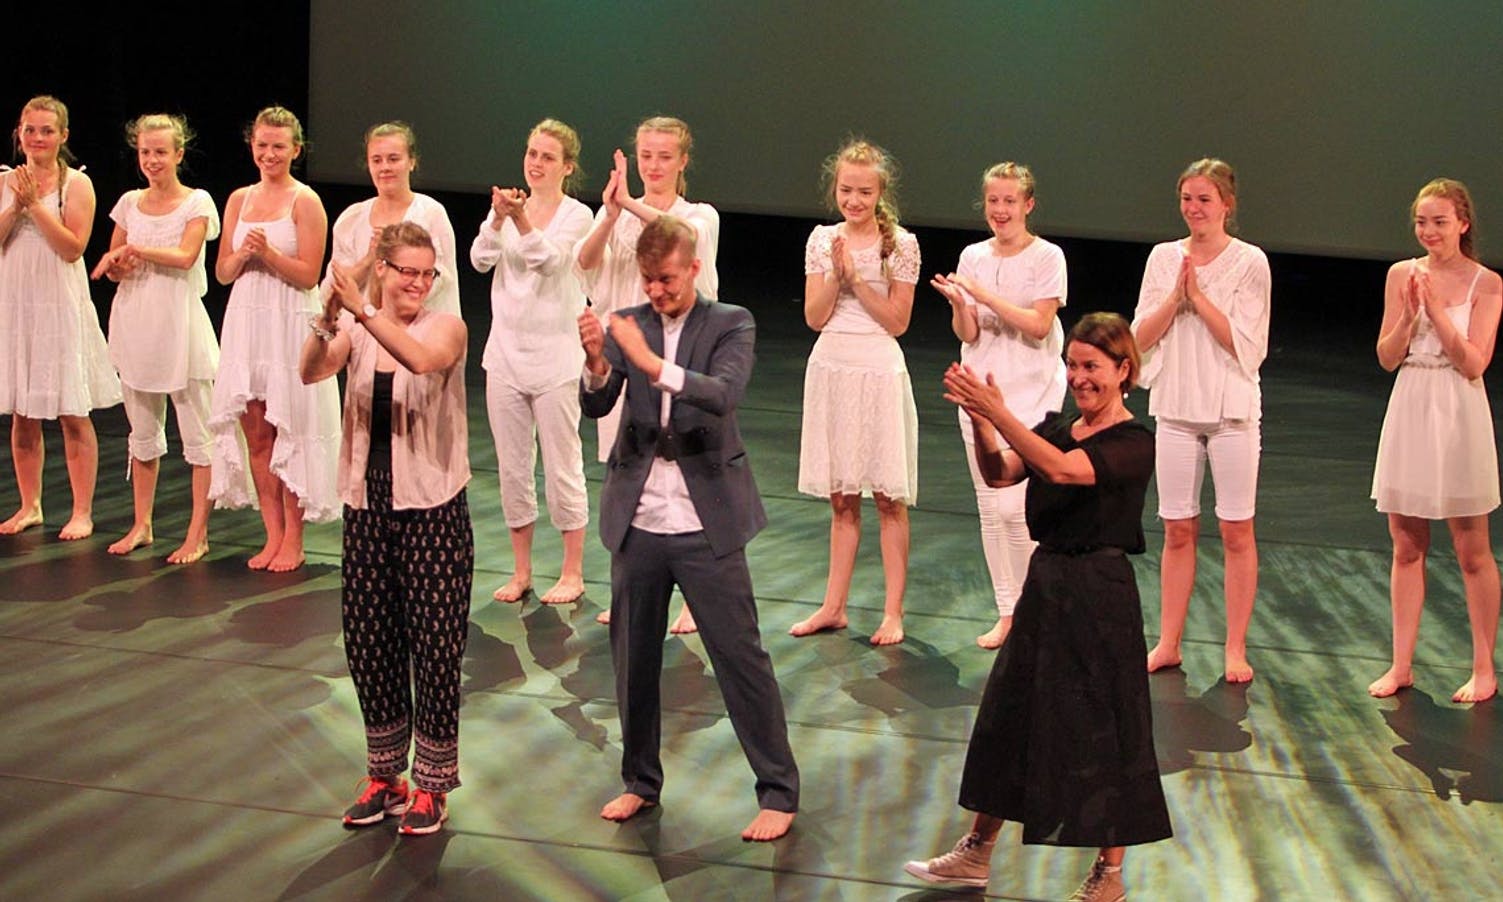 Dansepedagog Julia Bergesen, konferansier Benjamin Langeland og dansepedagog Patricia Langeland tar imot ein velfortent applaus.  (Foto: KML)